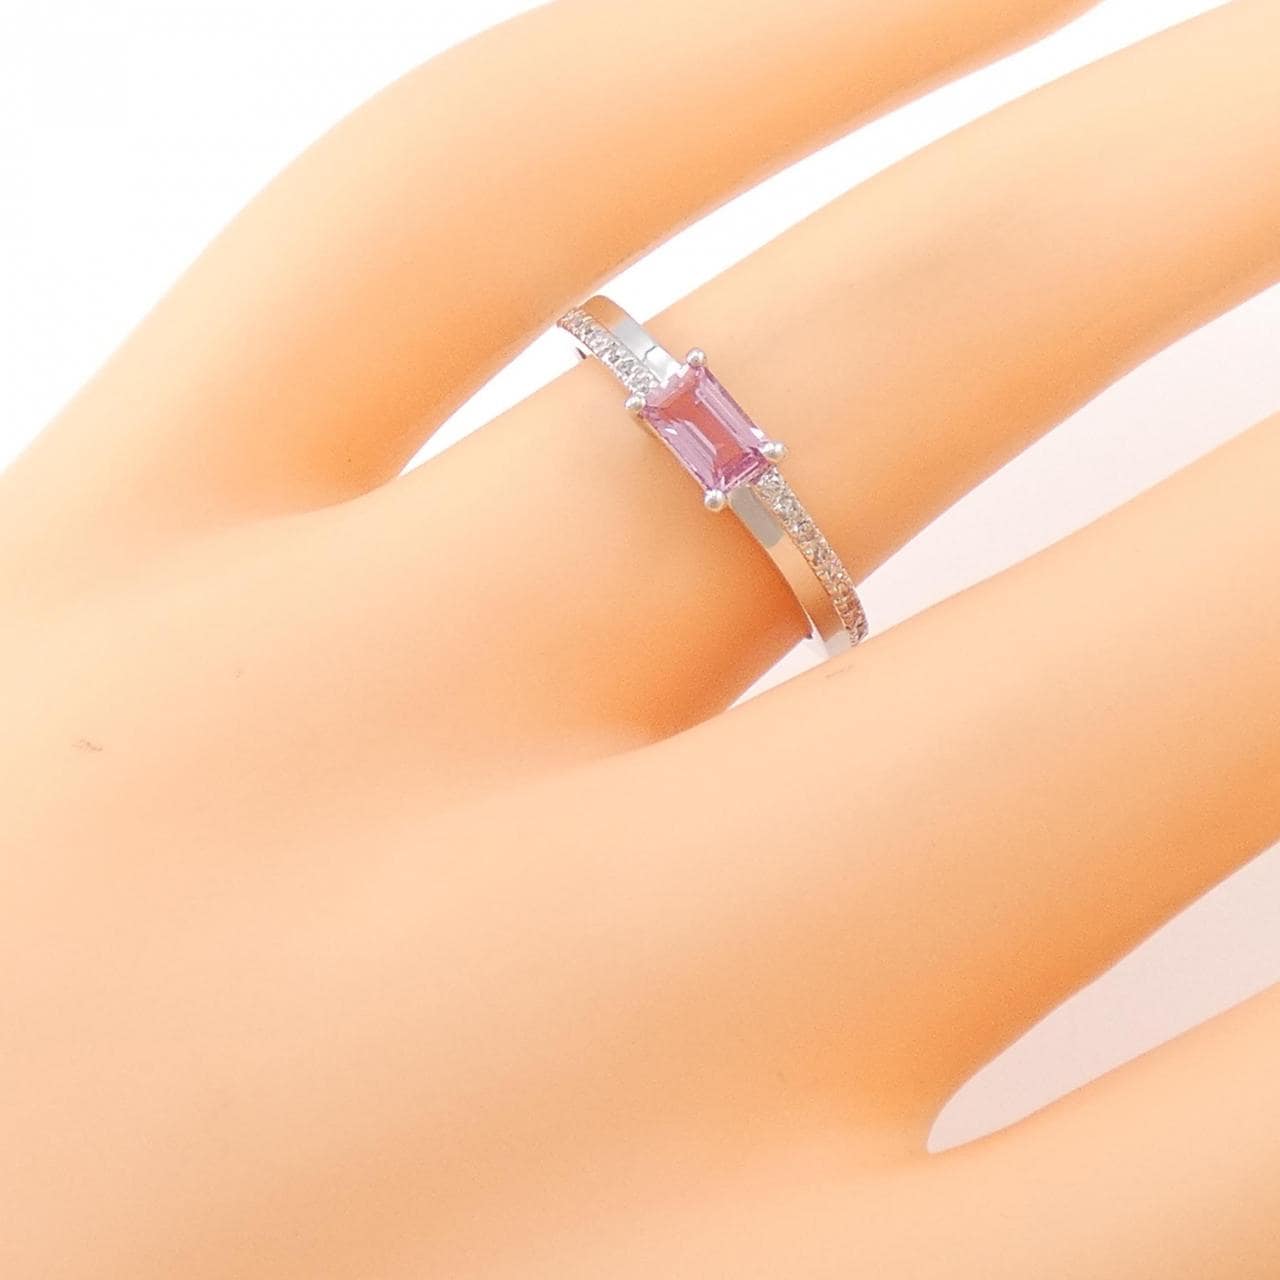 K18WG Sapphire Ring 0.405CT